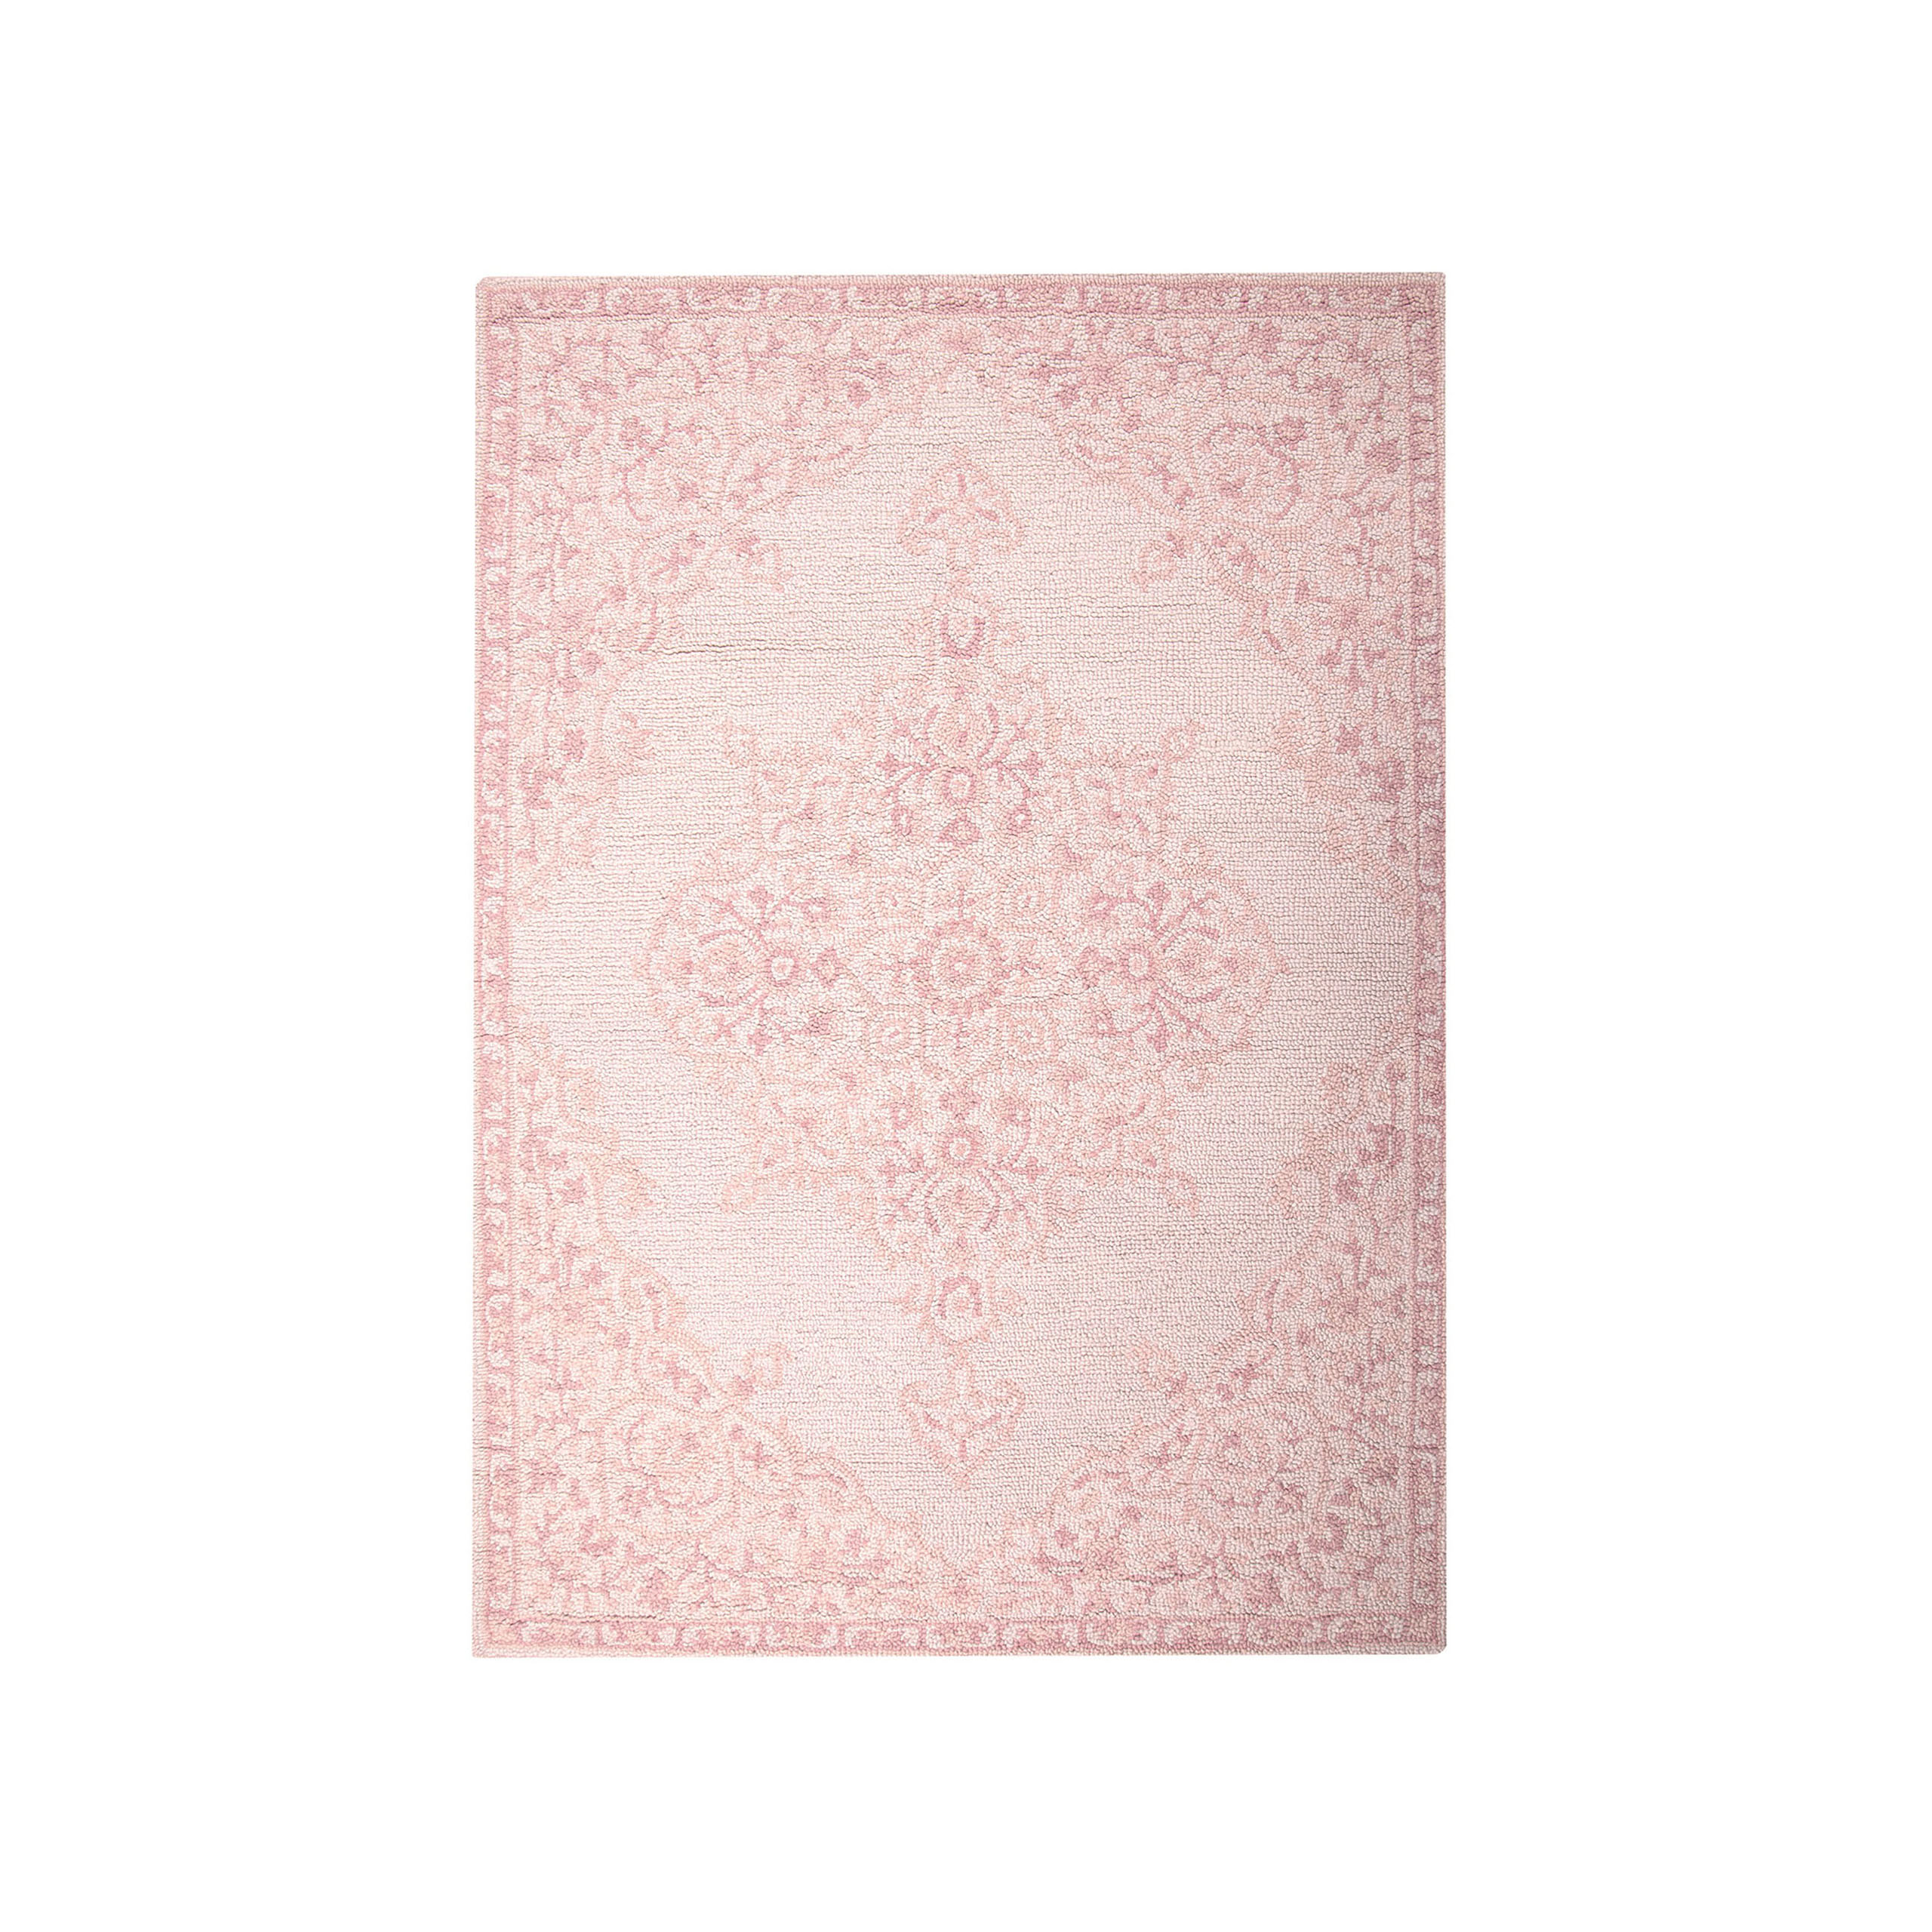 Pink rug main image on white background